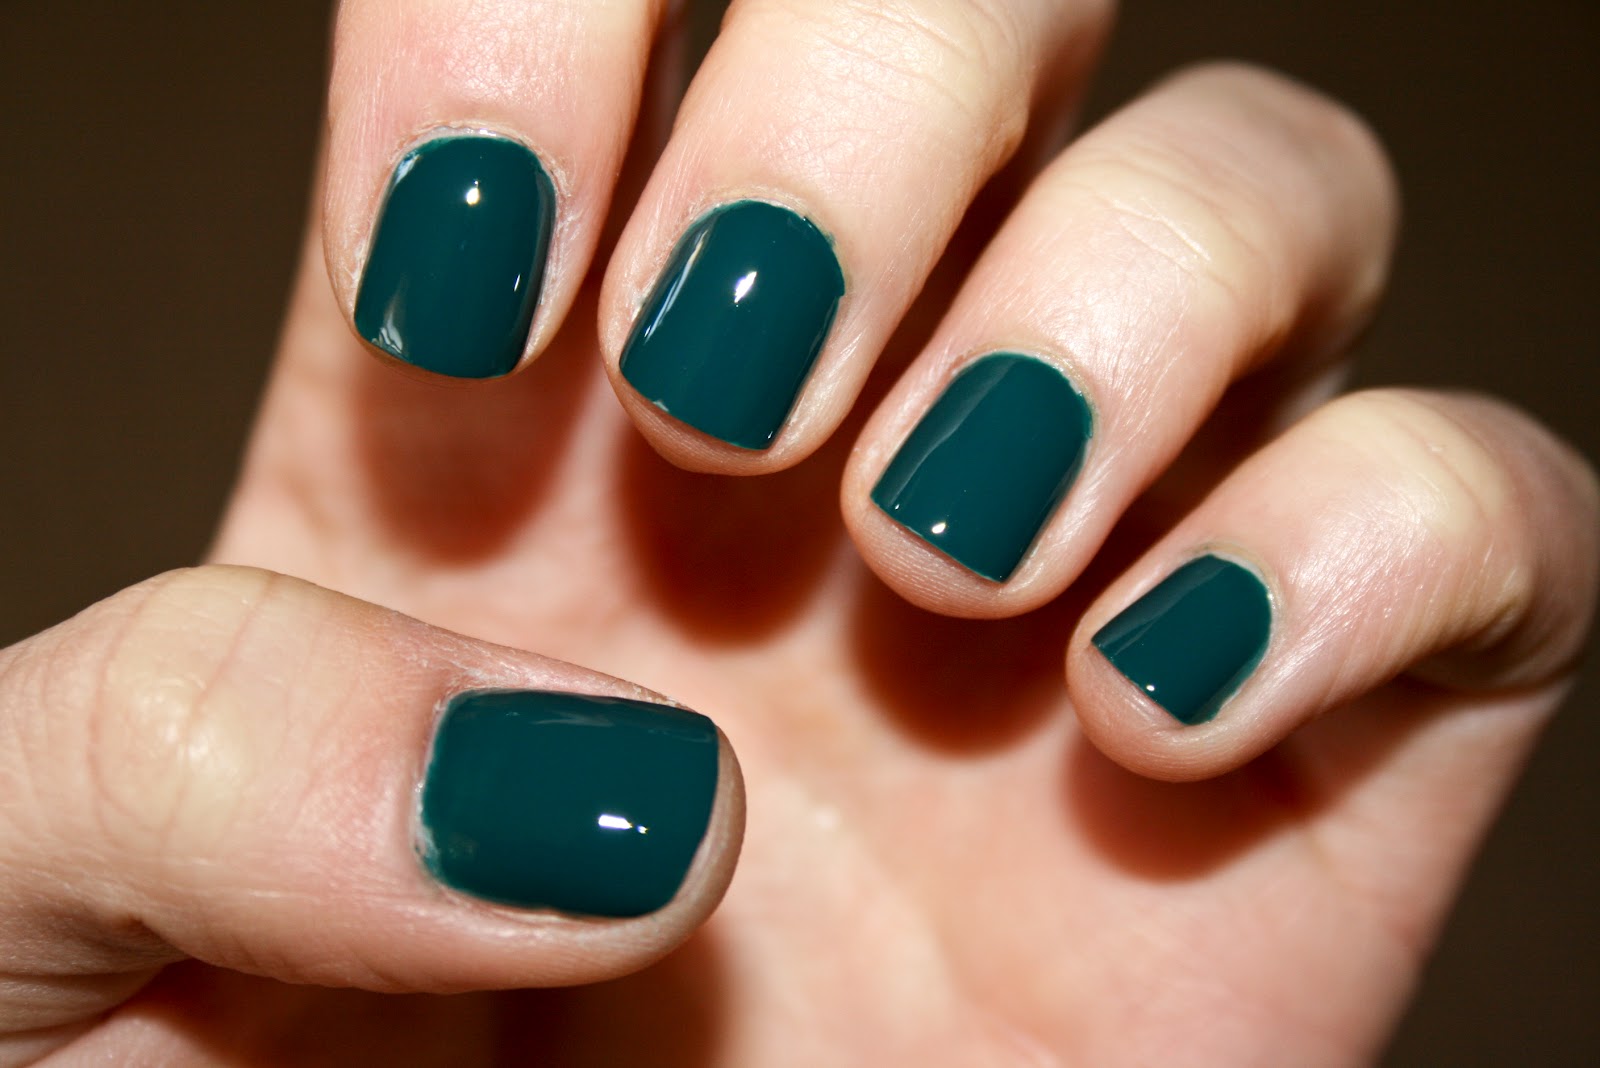 3. "Tropical Teal" nail polish color - wide 5